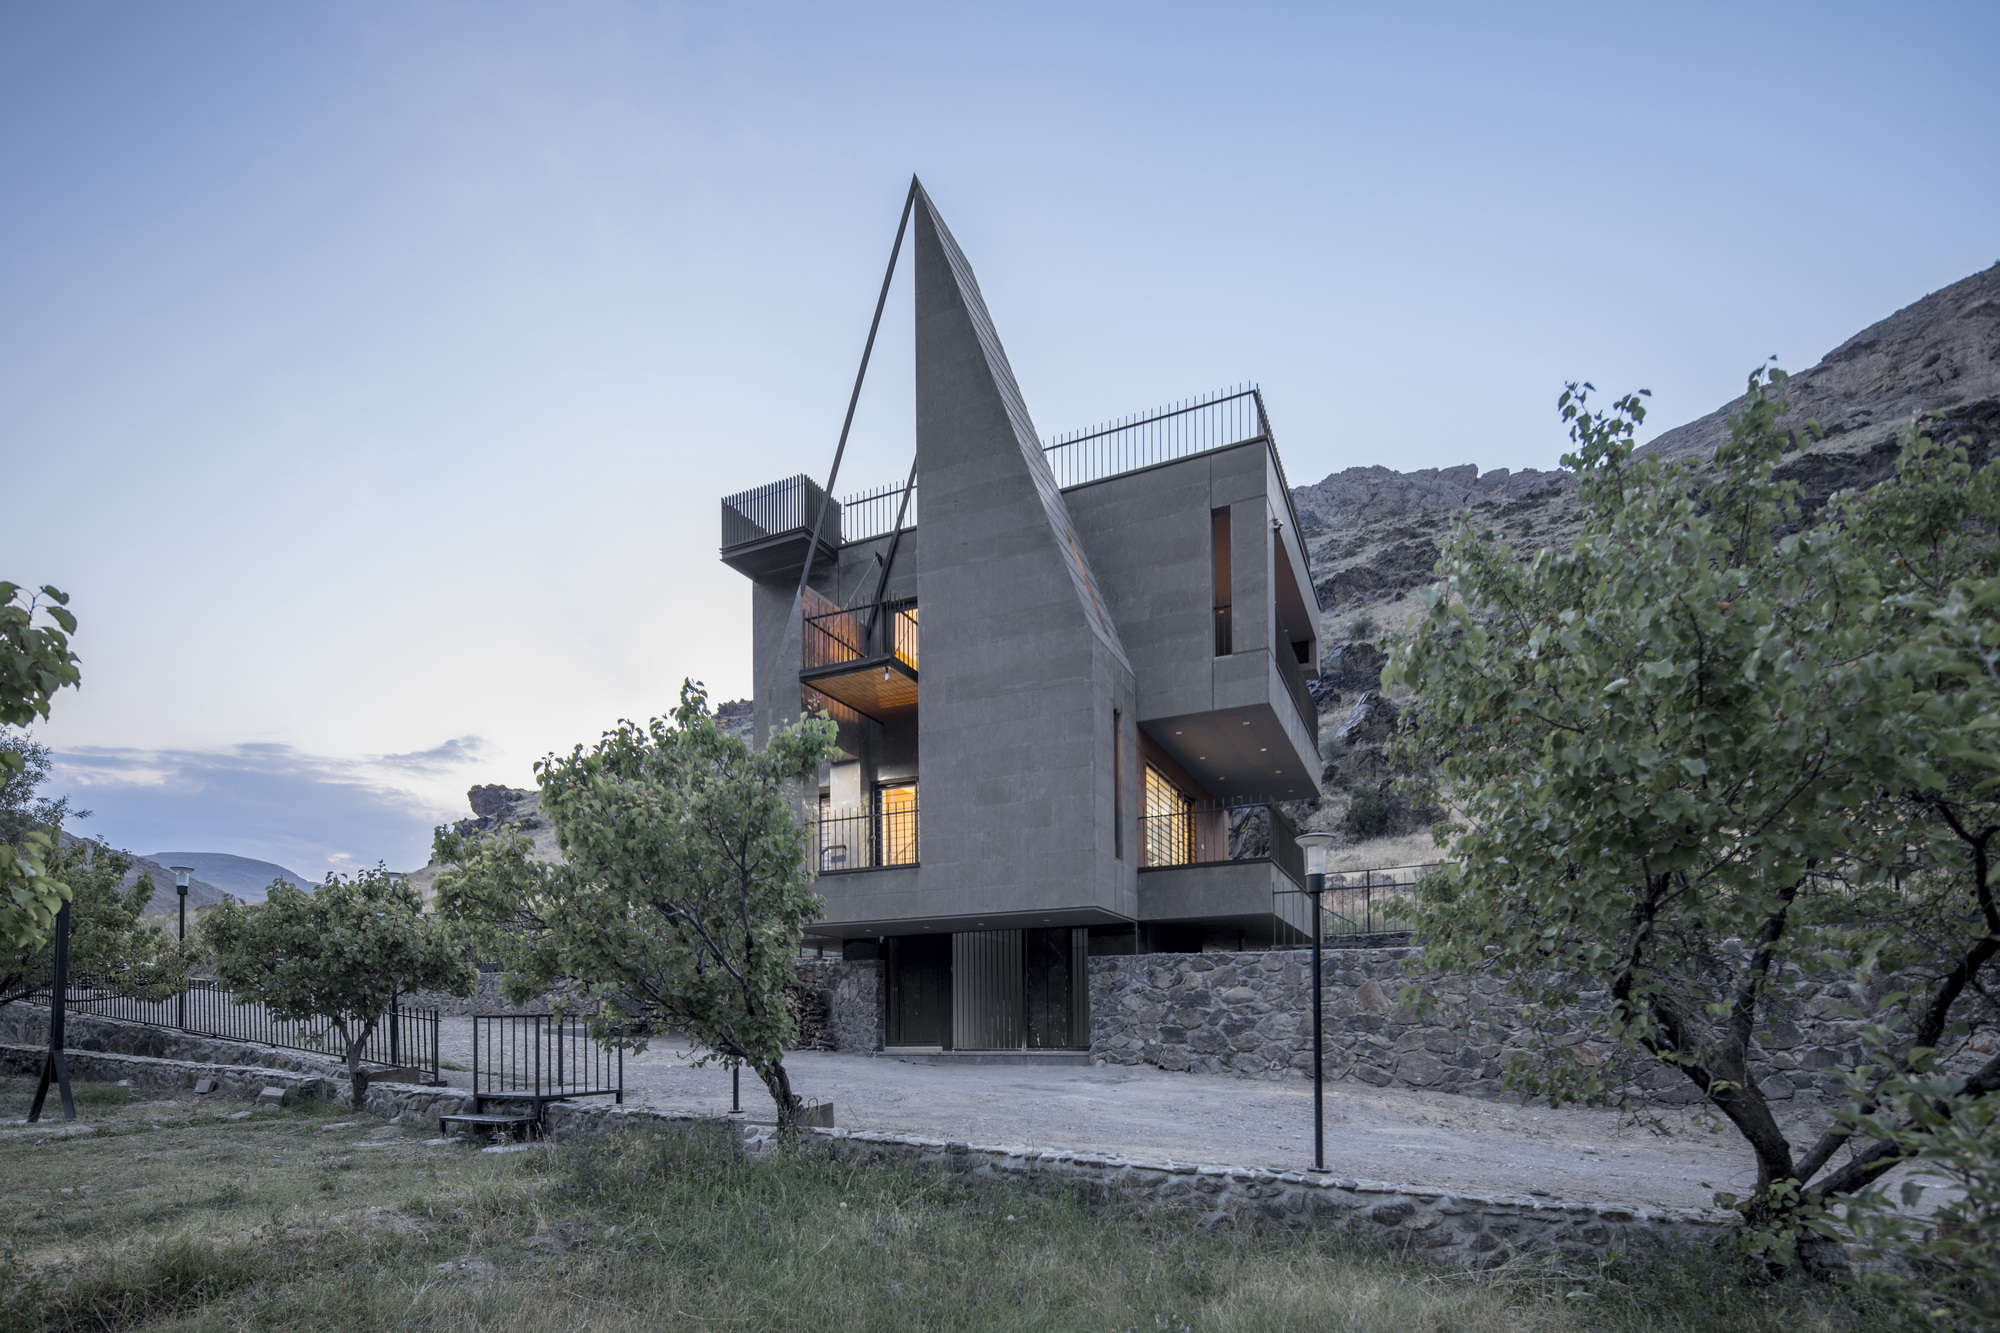 Gray Villa: Architecture Representation of Rocky Mountains